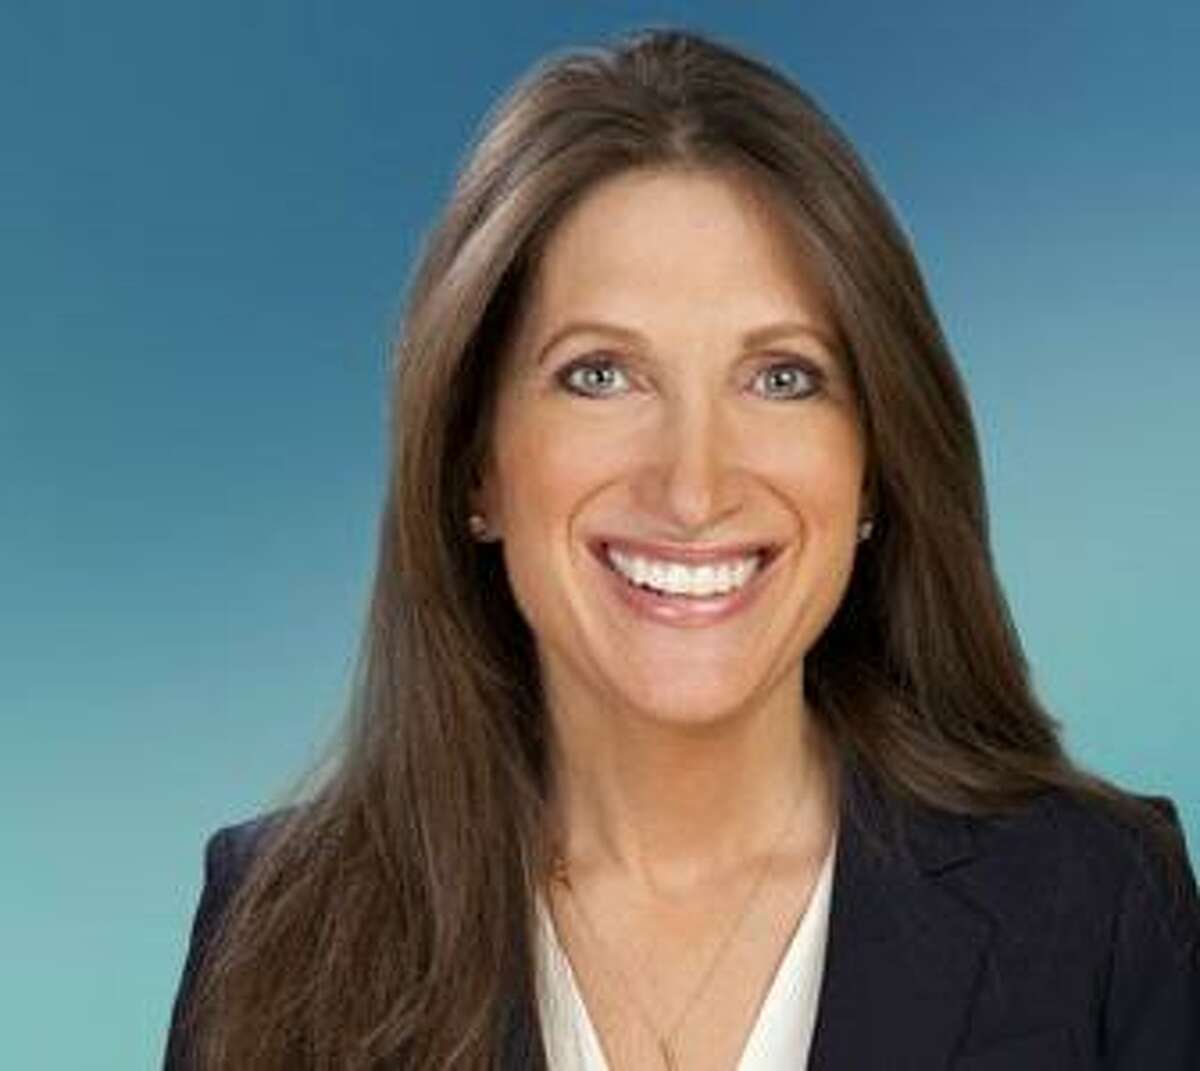 Westport-based Leadership Capital Group has hired Jennifer Rosenthal as partner.